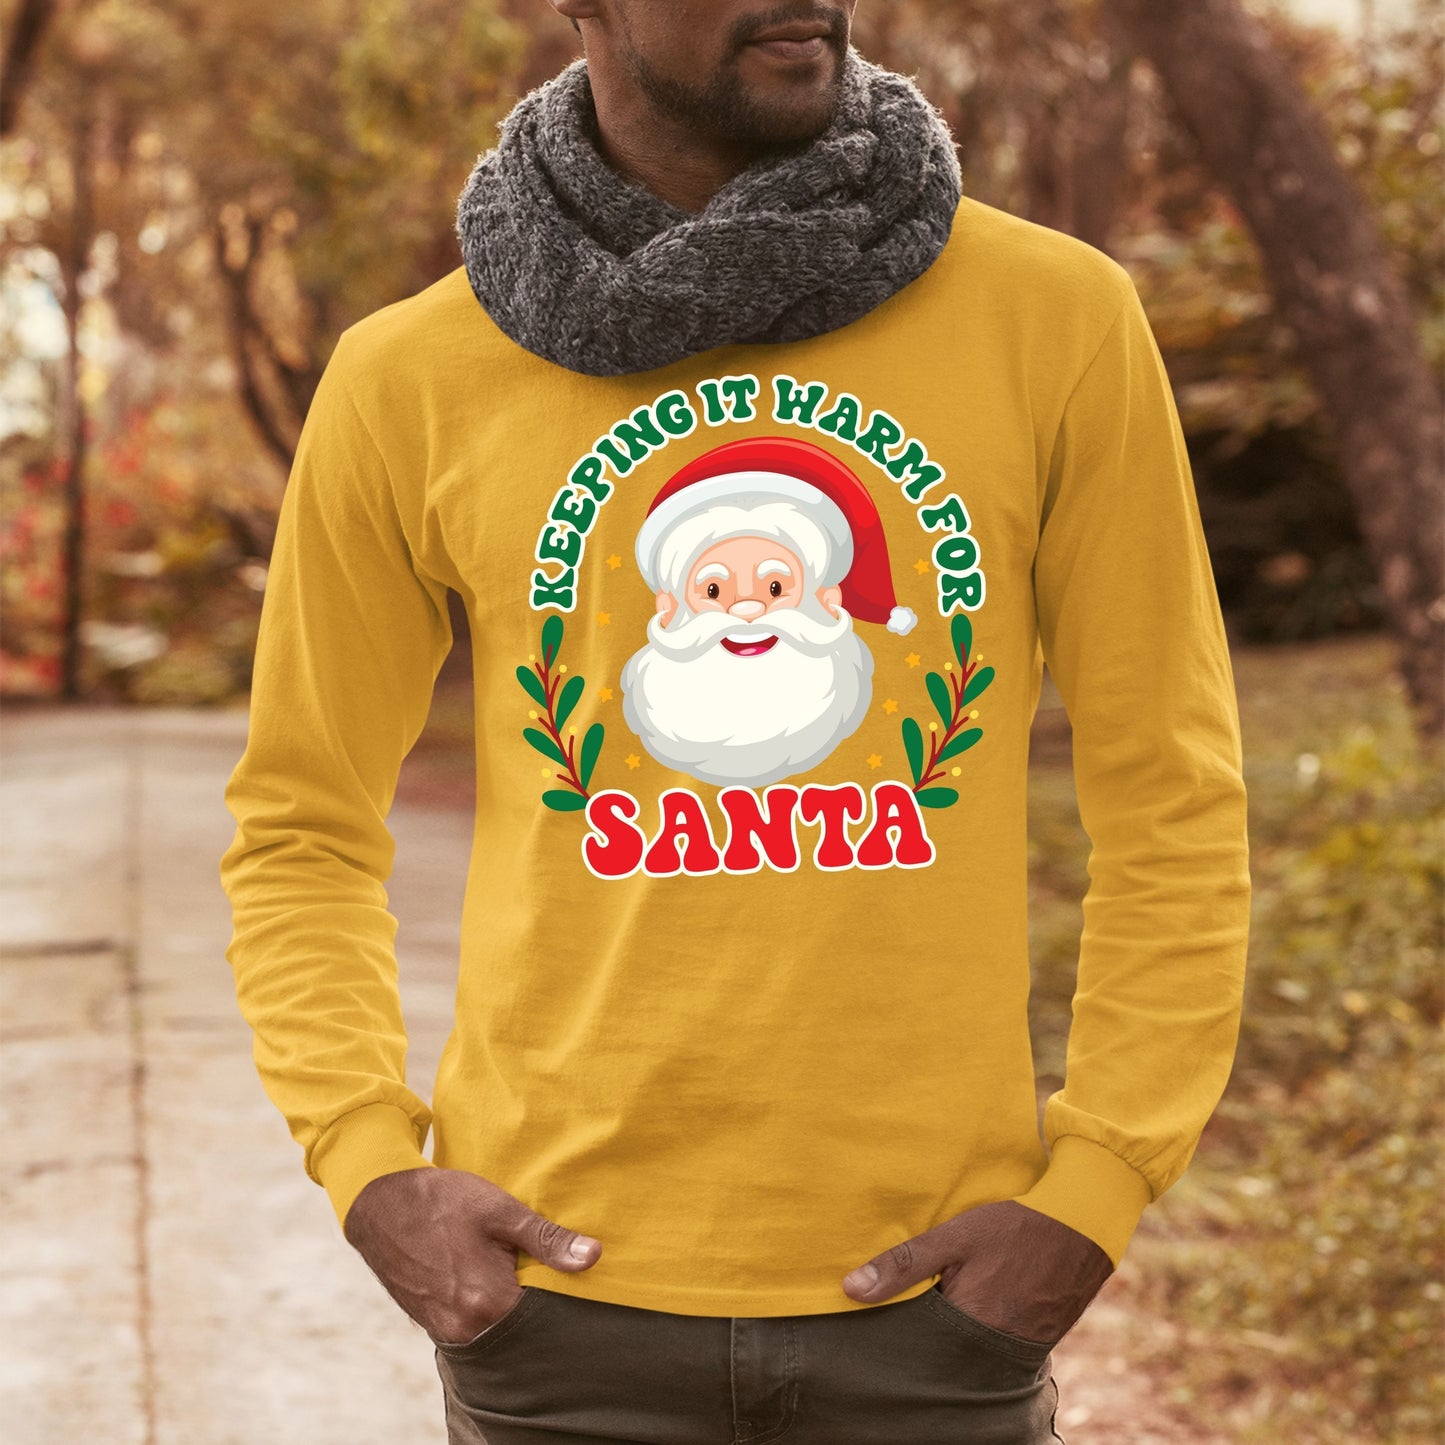 Keeping It Warm for Santa, Christmas Long Sleeves, Christmas Crewneck For Men, Christmas Sweater, Christmas Sweatshirt, Christmas Present